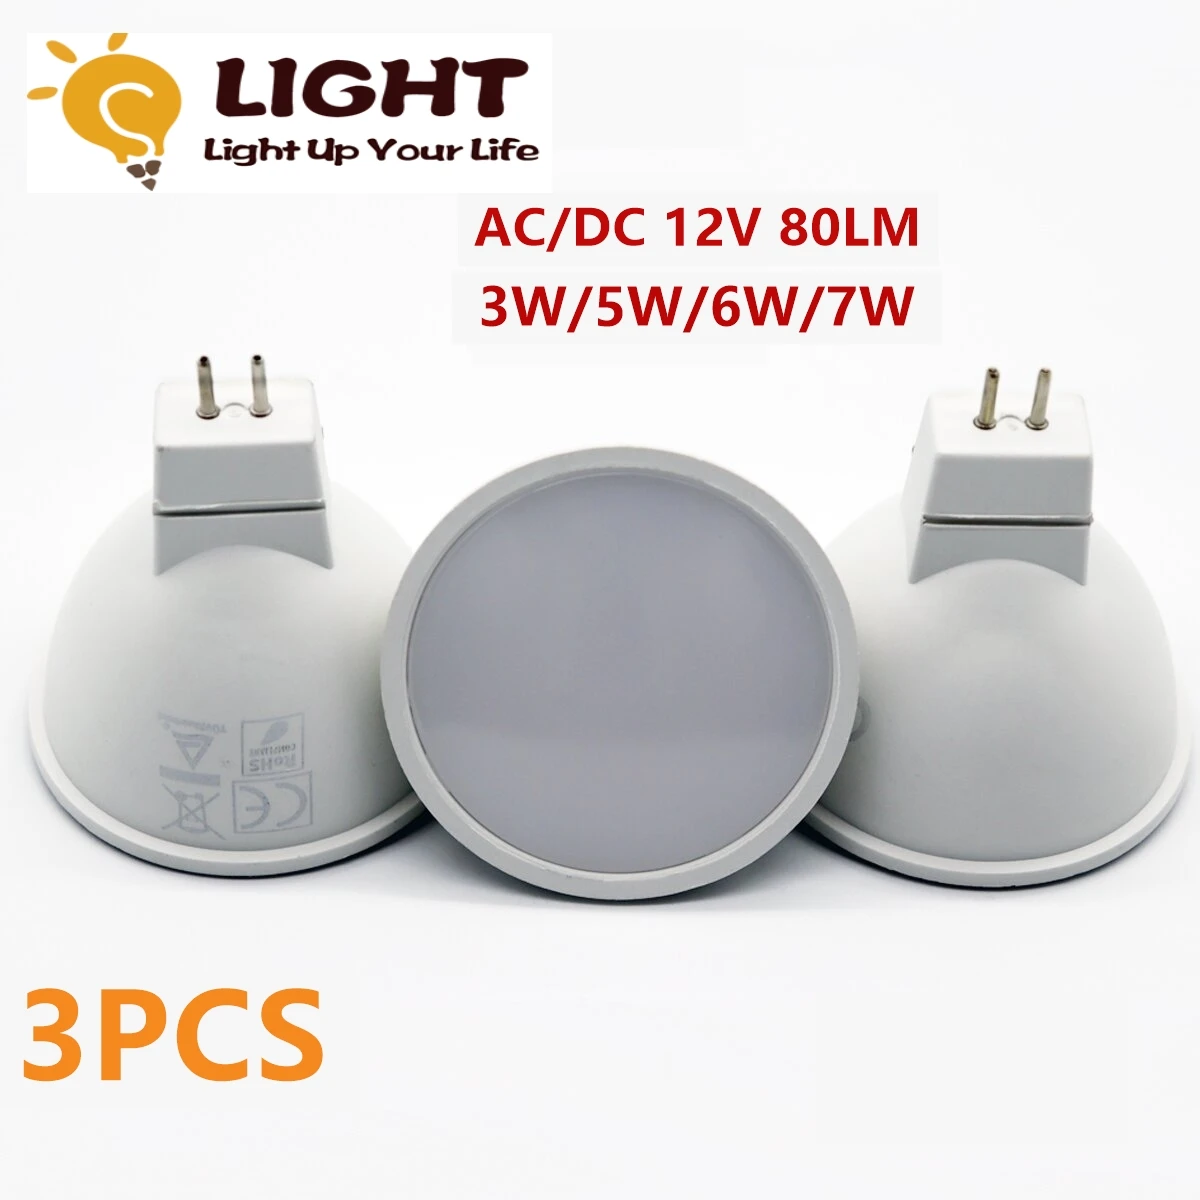 

3PC Led low-voltage 12V spotlight MR16 3W-7W No flicker high lumen to replace 20W 50W halogen lamp for kitchen bathroom study